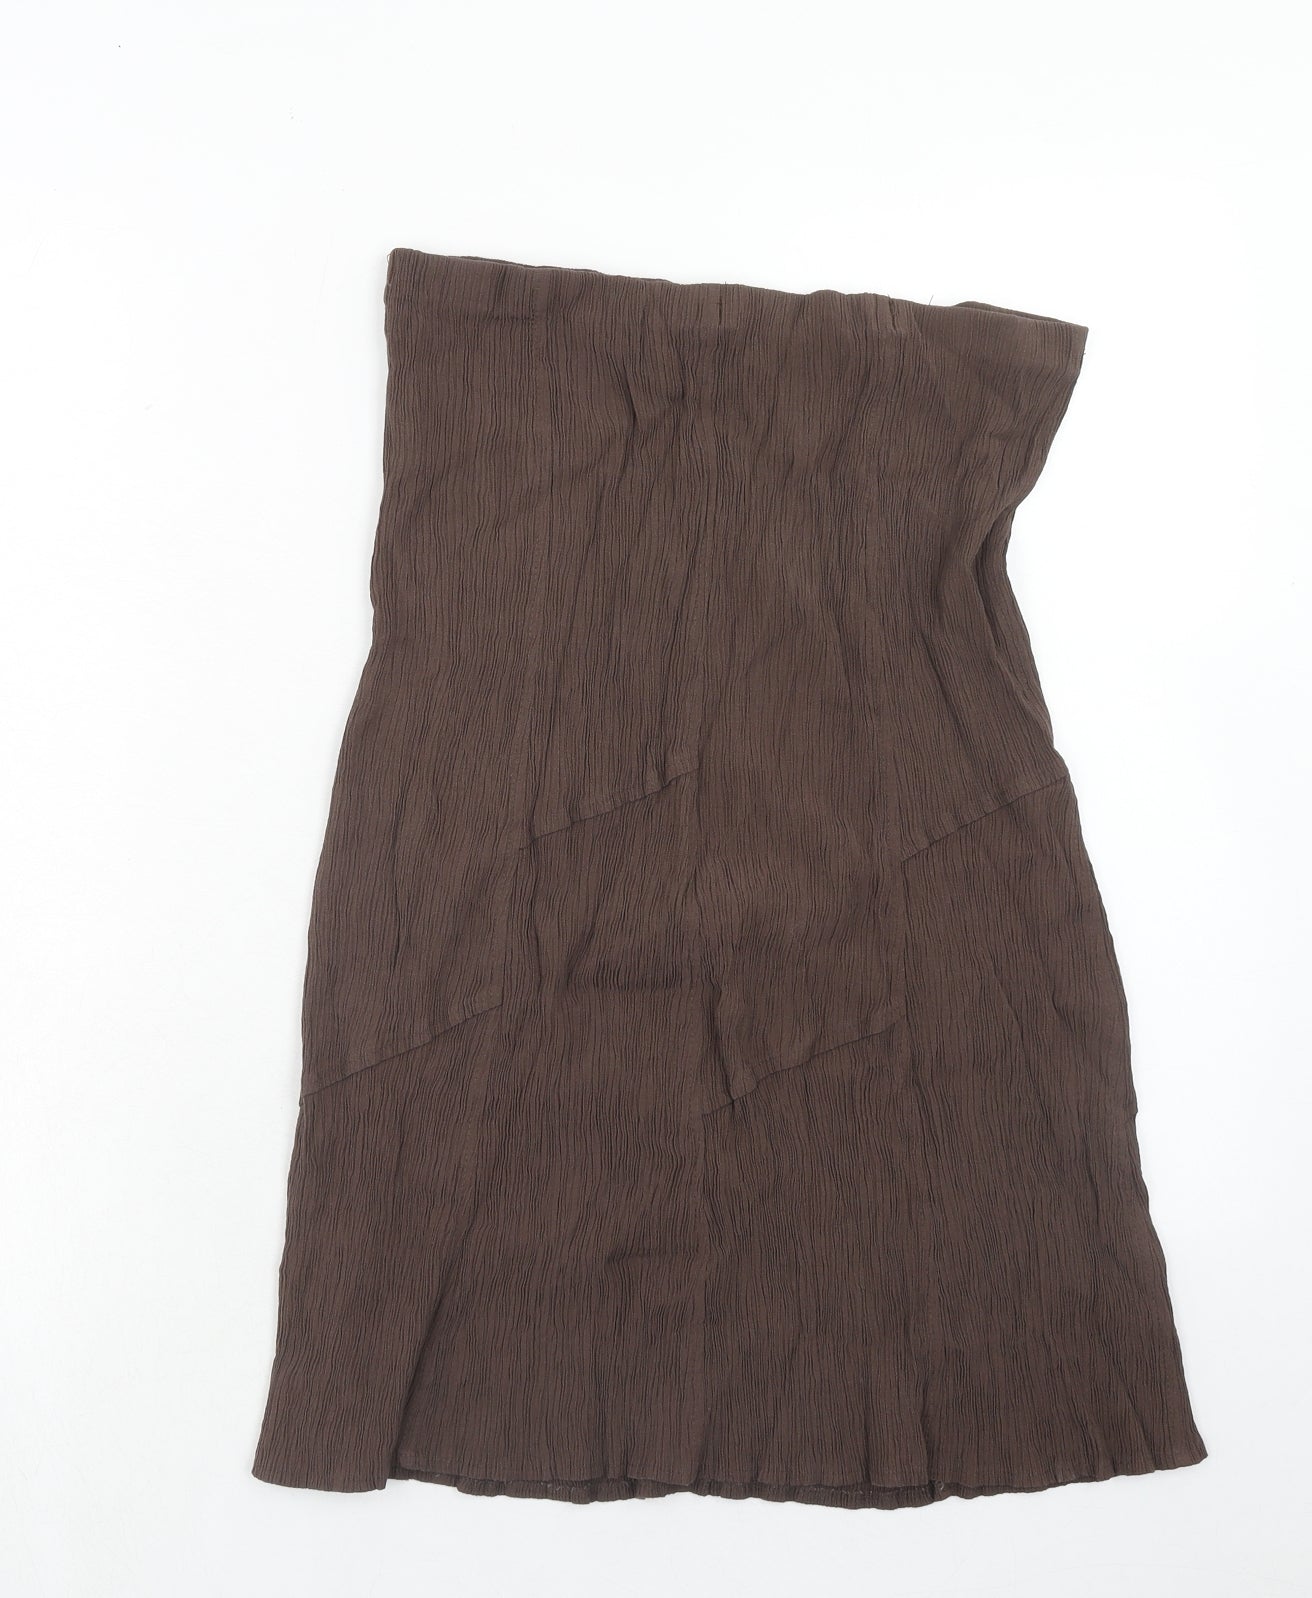 Bonmarché Womens Brown Viscose A-Line Skirt Size 12